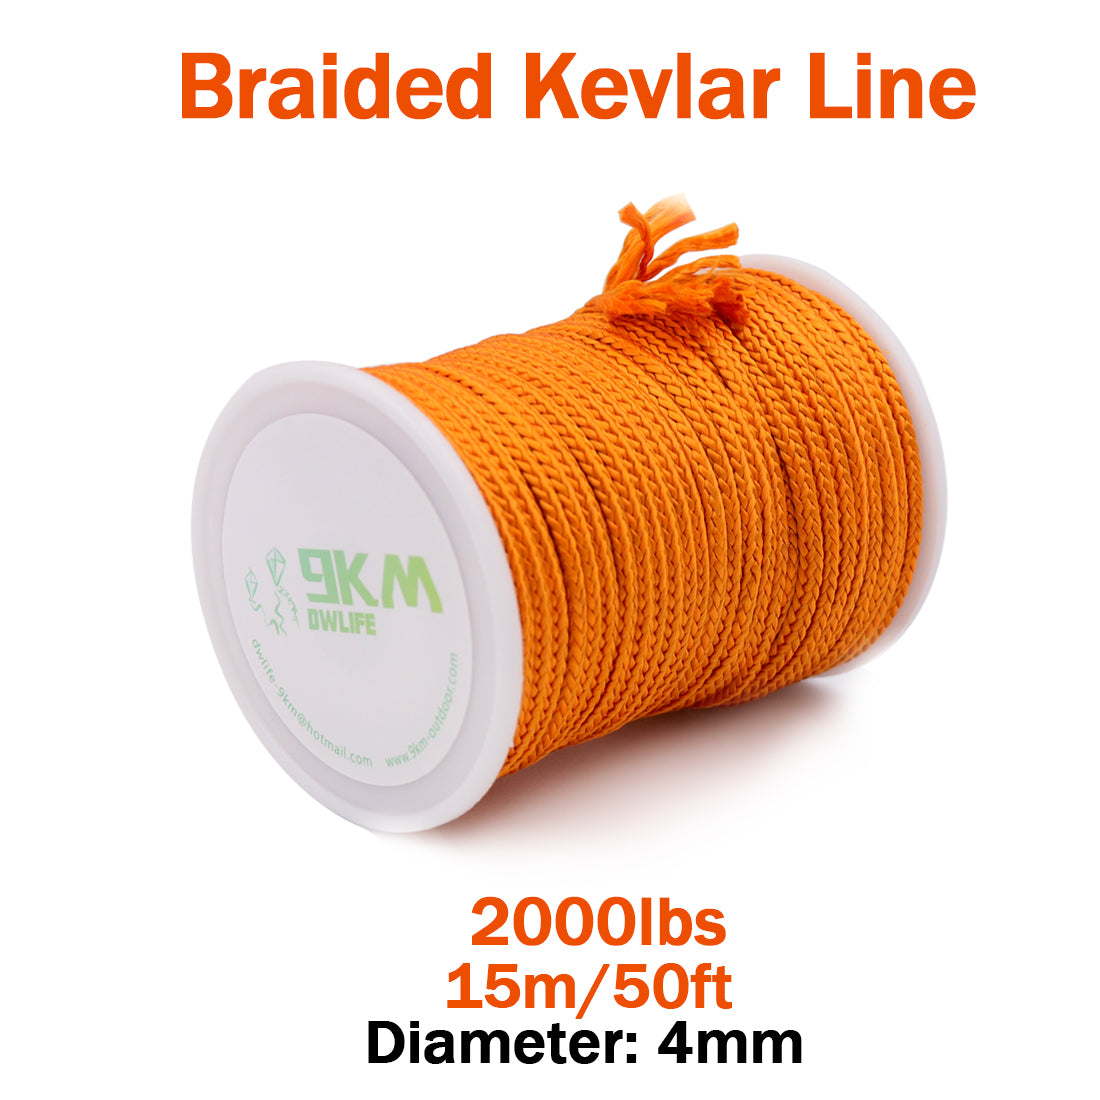 High Strength Orange Kevlar Line（Small Roll） – 9km-dwlife